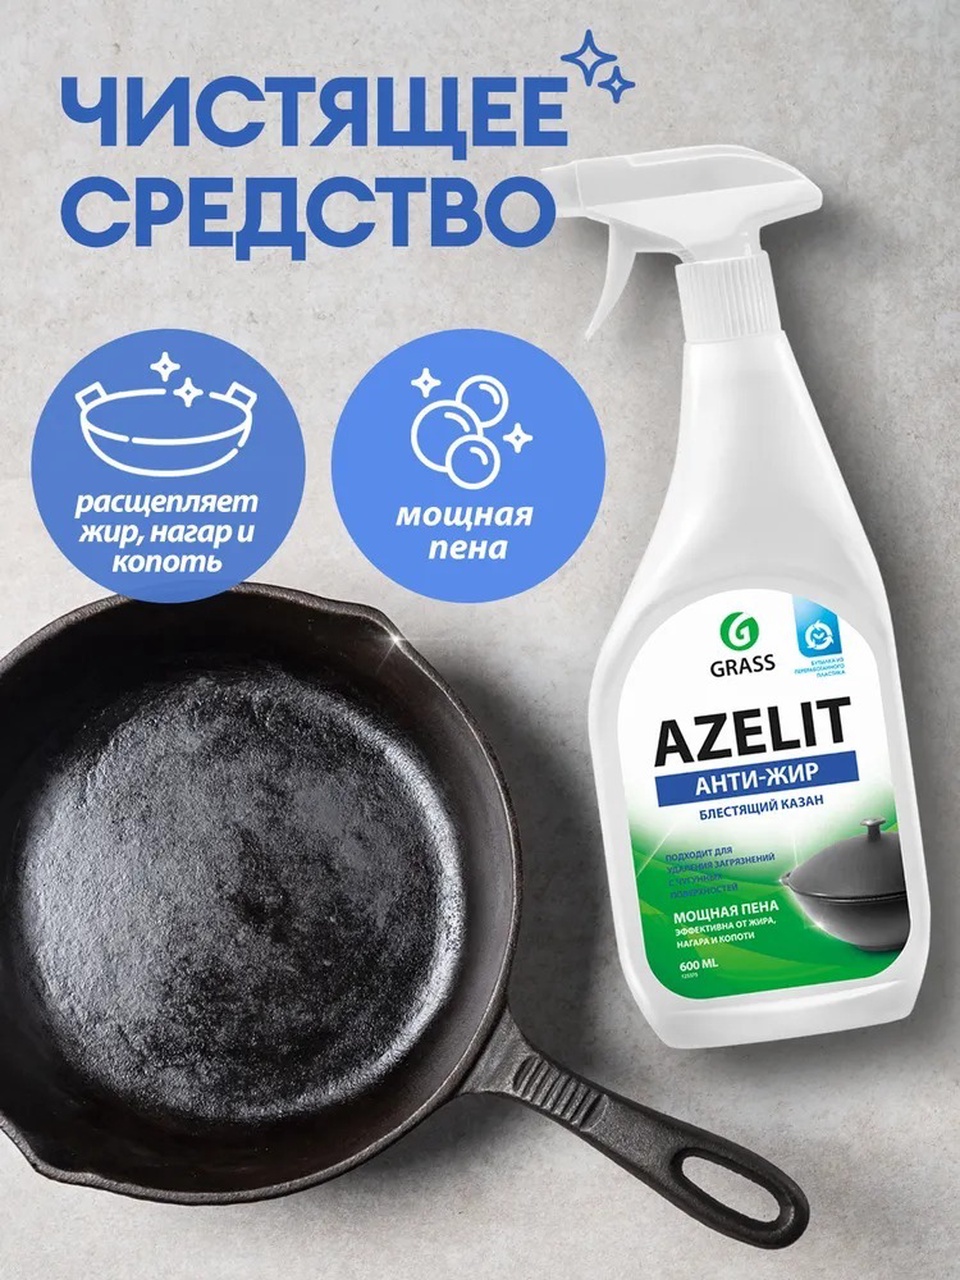 Чистящее средство для кухни Azelit GRASS Азелит казан антижир 600мл - 200 ₽, заказать онлайн.